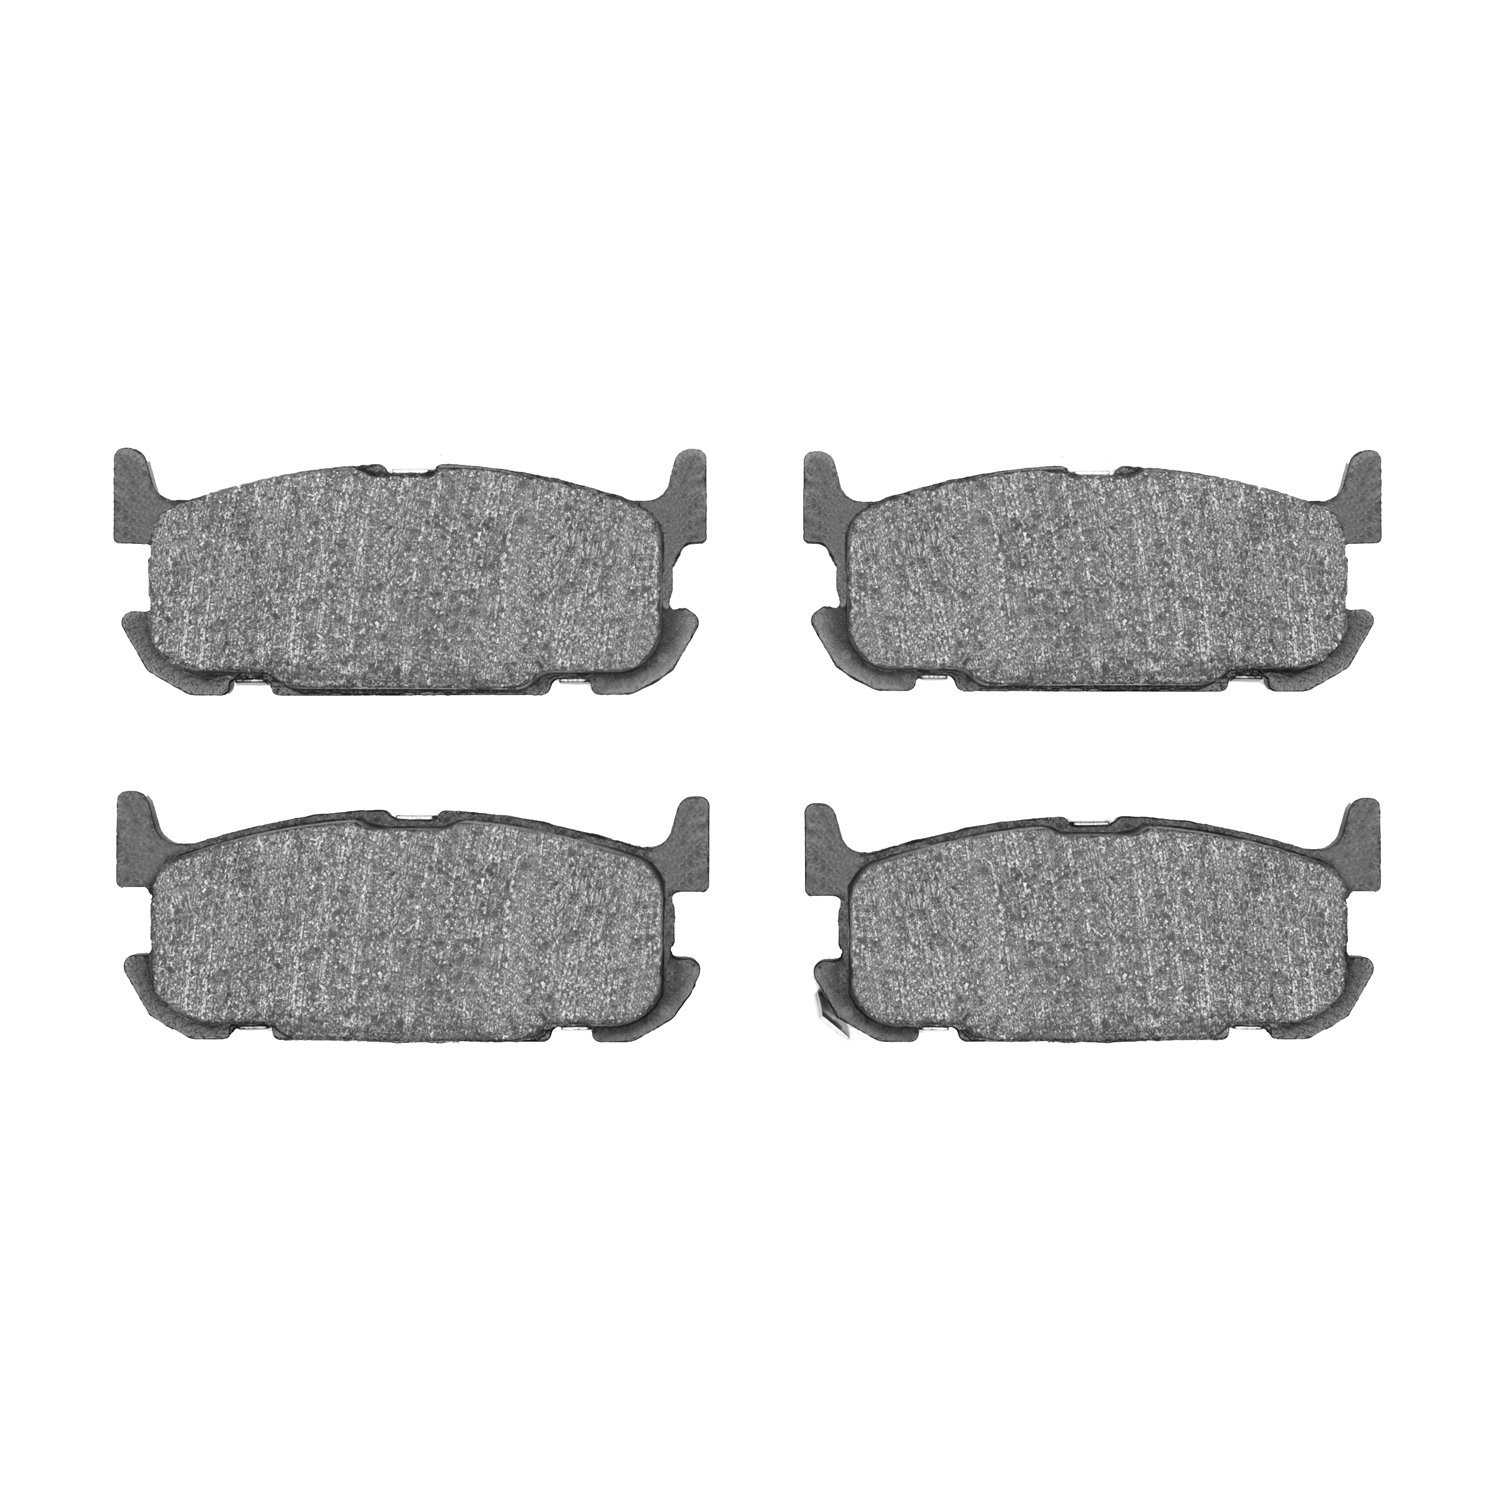 1310-0891-00 3000-Series Ceramic Brake Pads, 2001-2005 Ford/Lincoln/Mercury/Mazda, Position: Rear